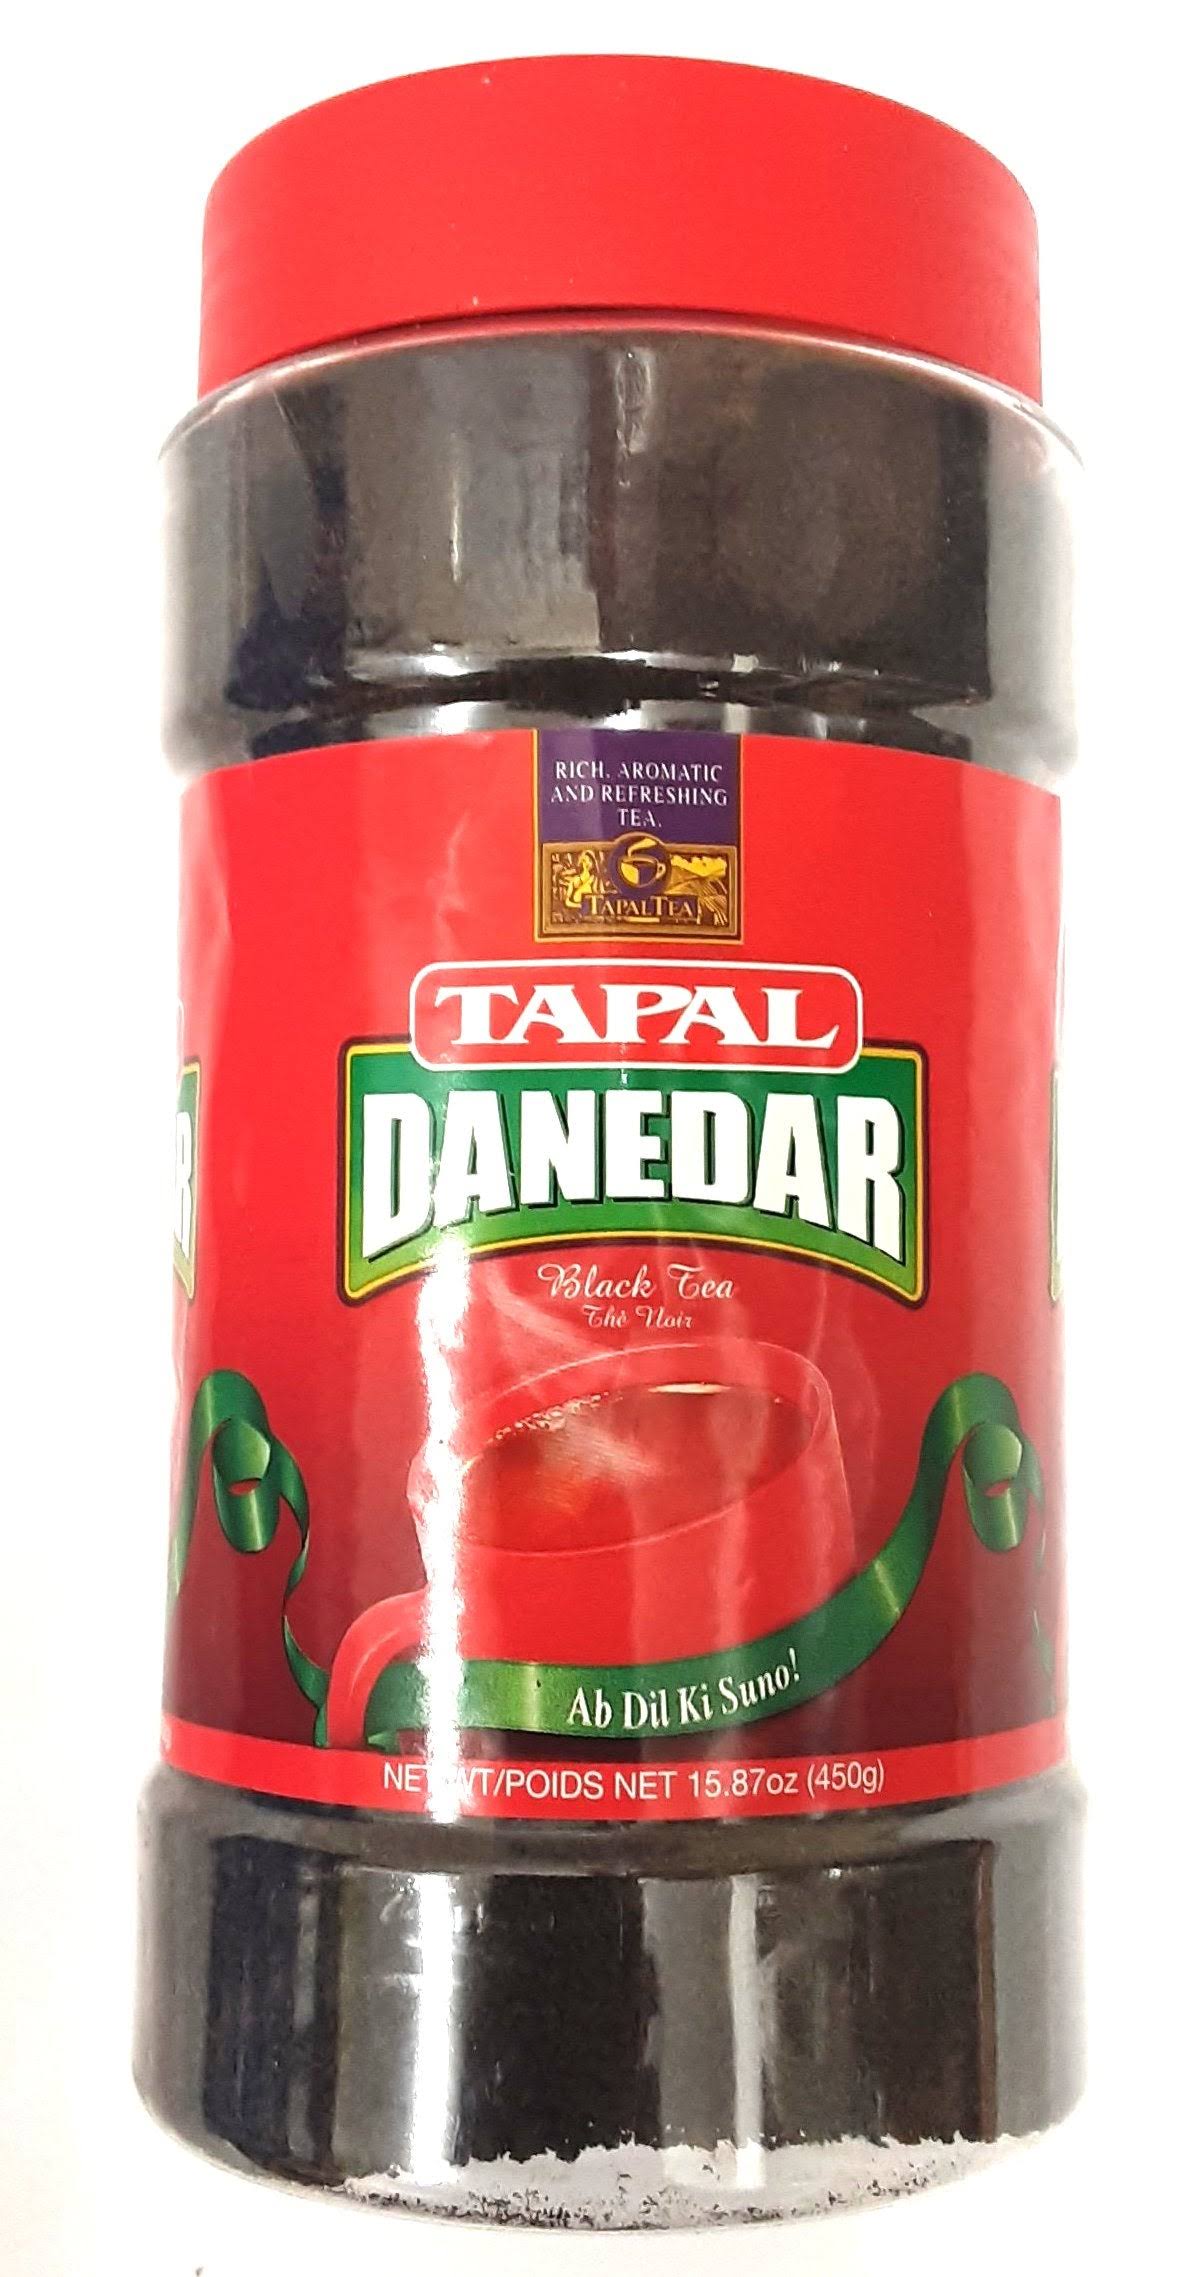 Tapal Tea Black Tea, Bags - 15.87 oz